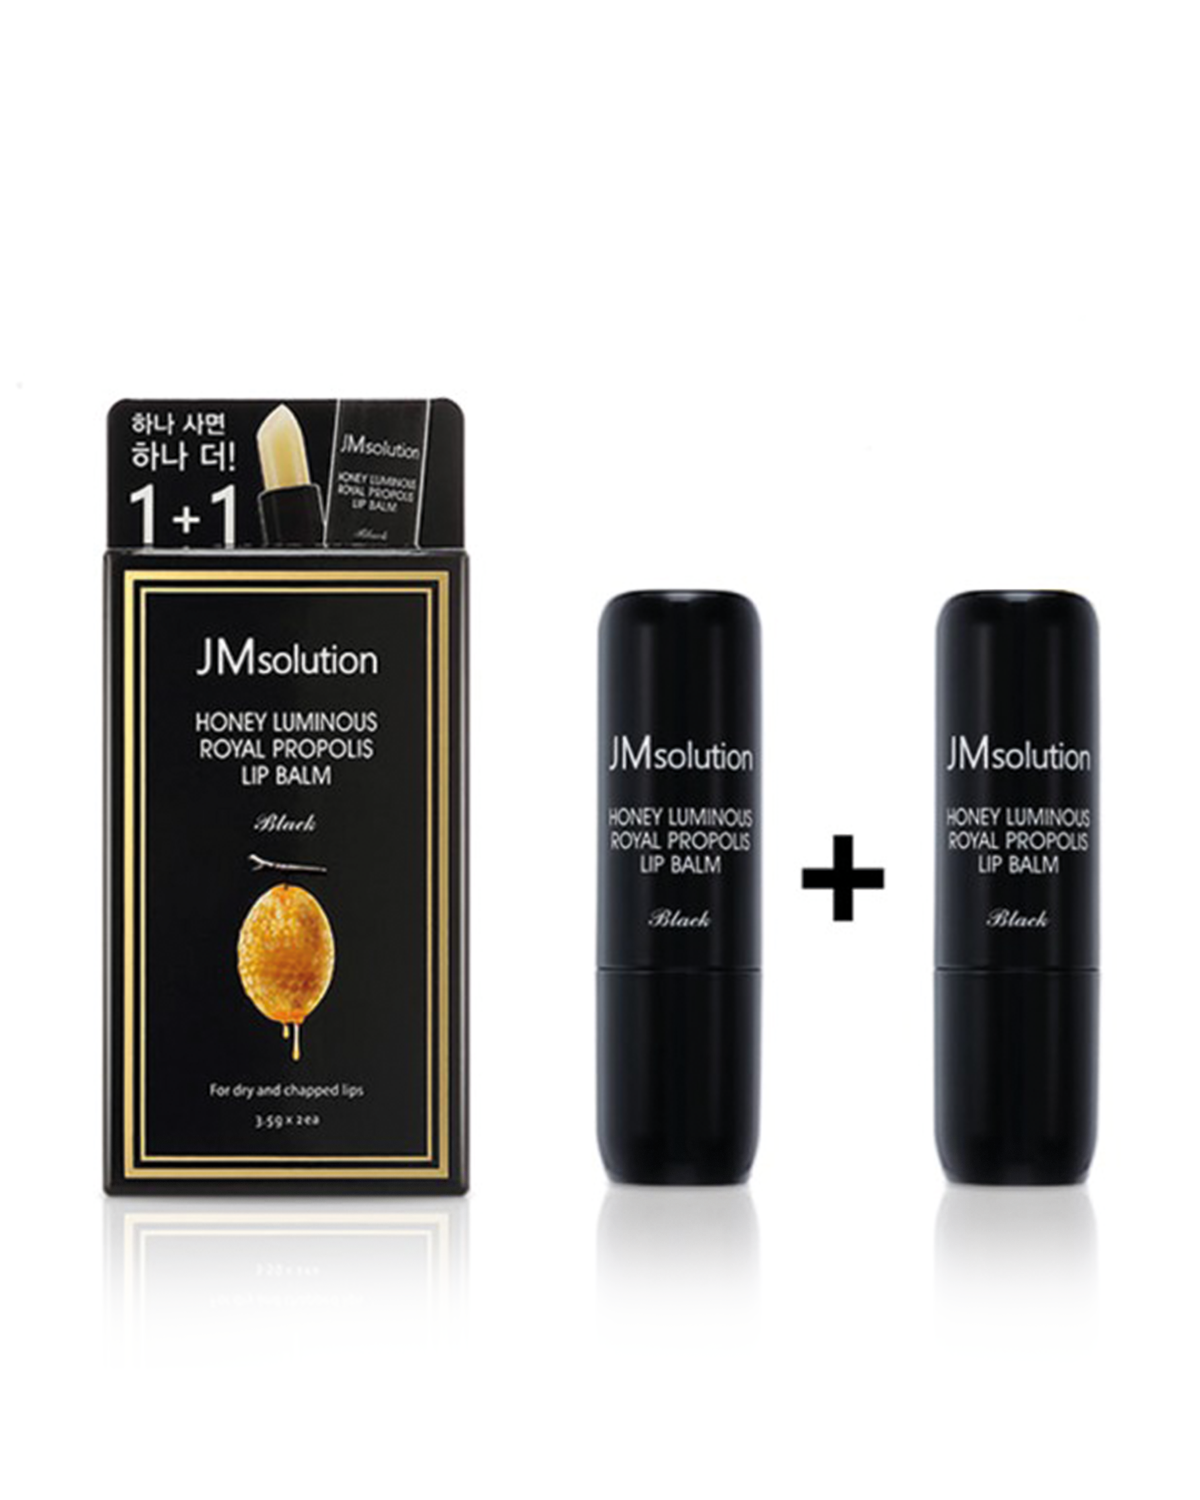 JM SOLUTION Honey Luminous Royal Propolis Lip Balm 3.5 g x 2 ea